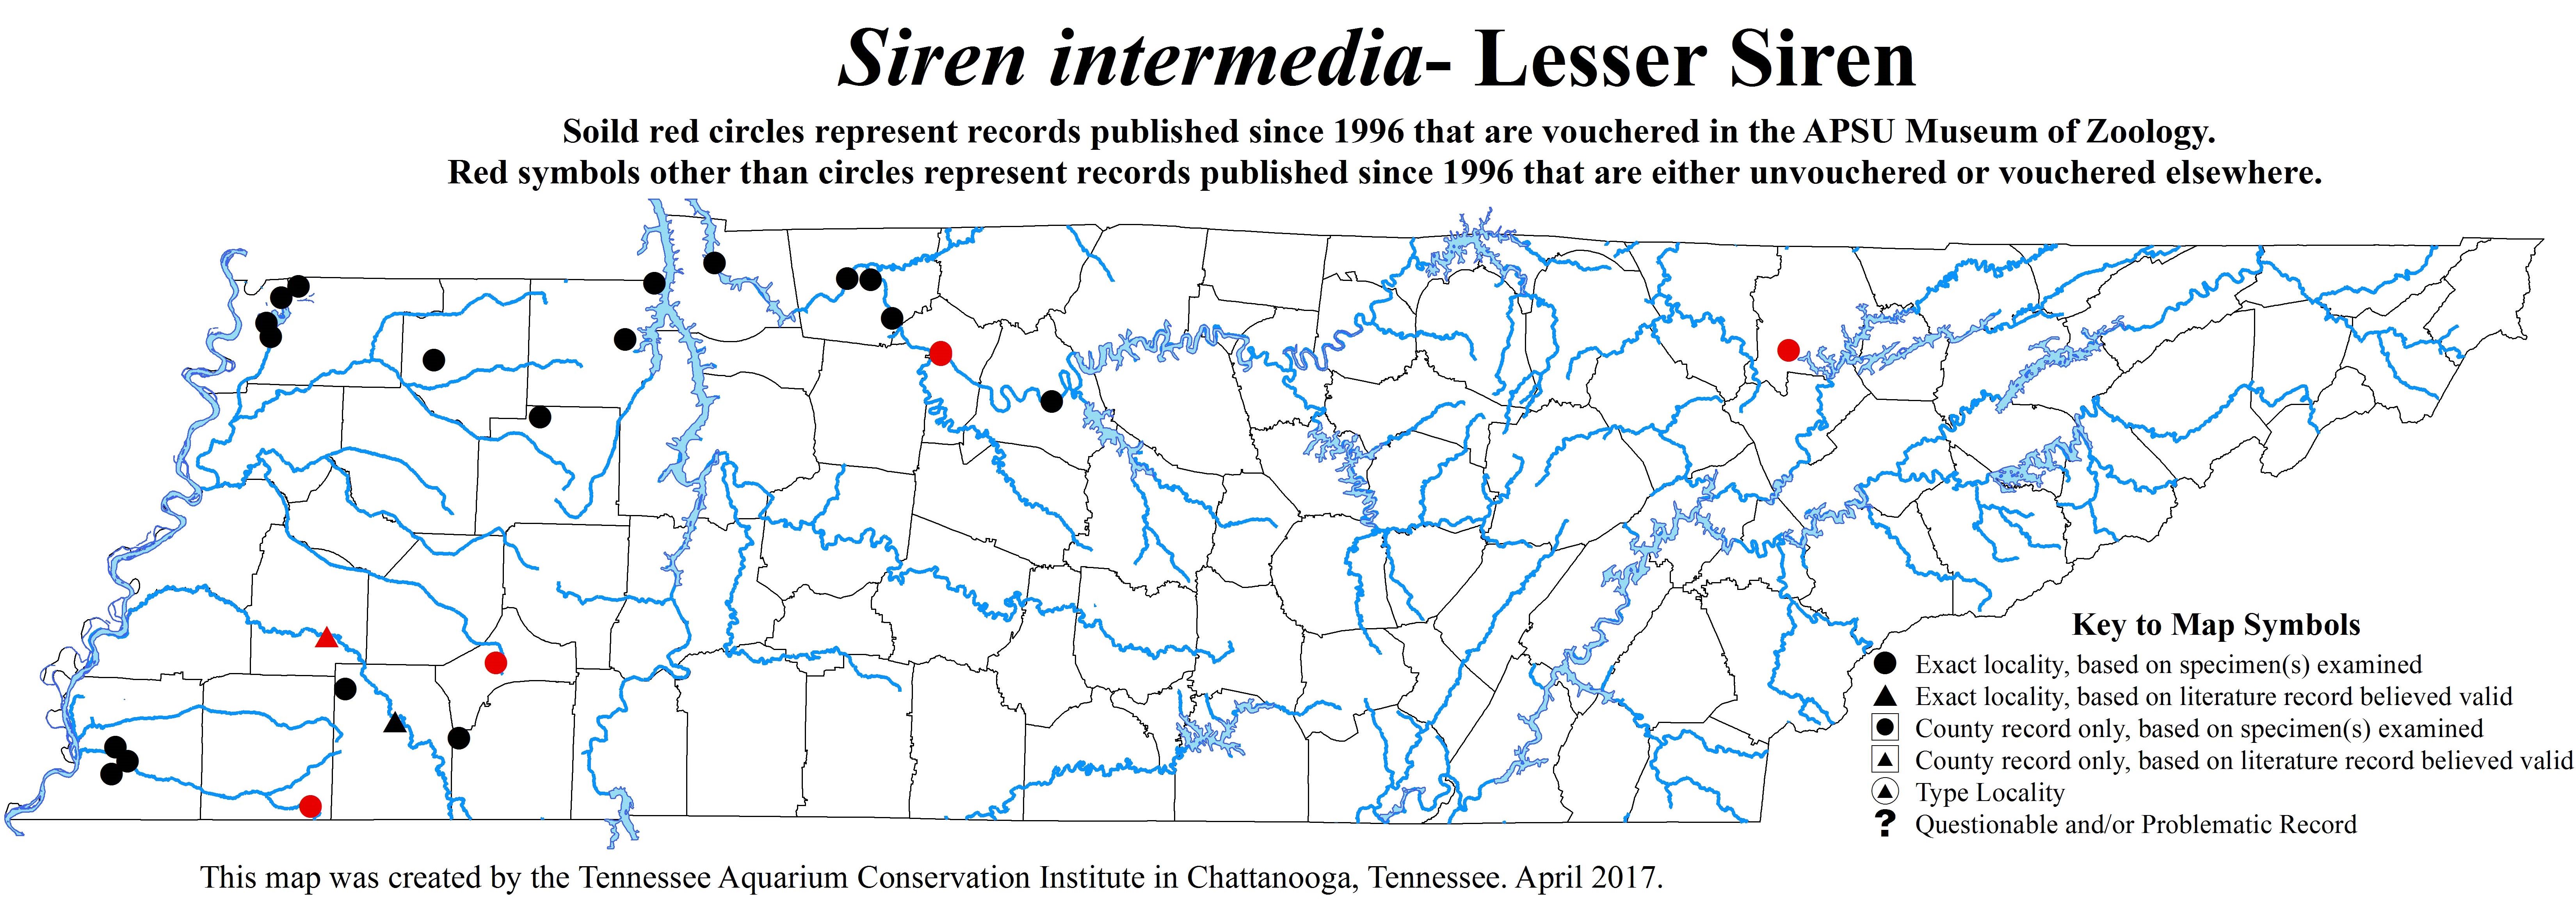 Update to Siren intermedia